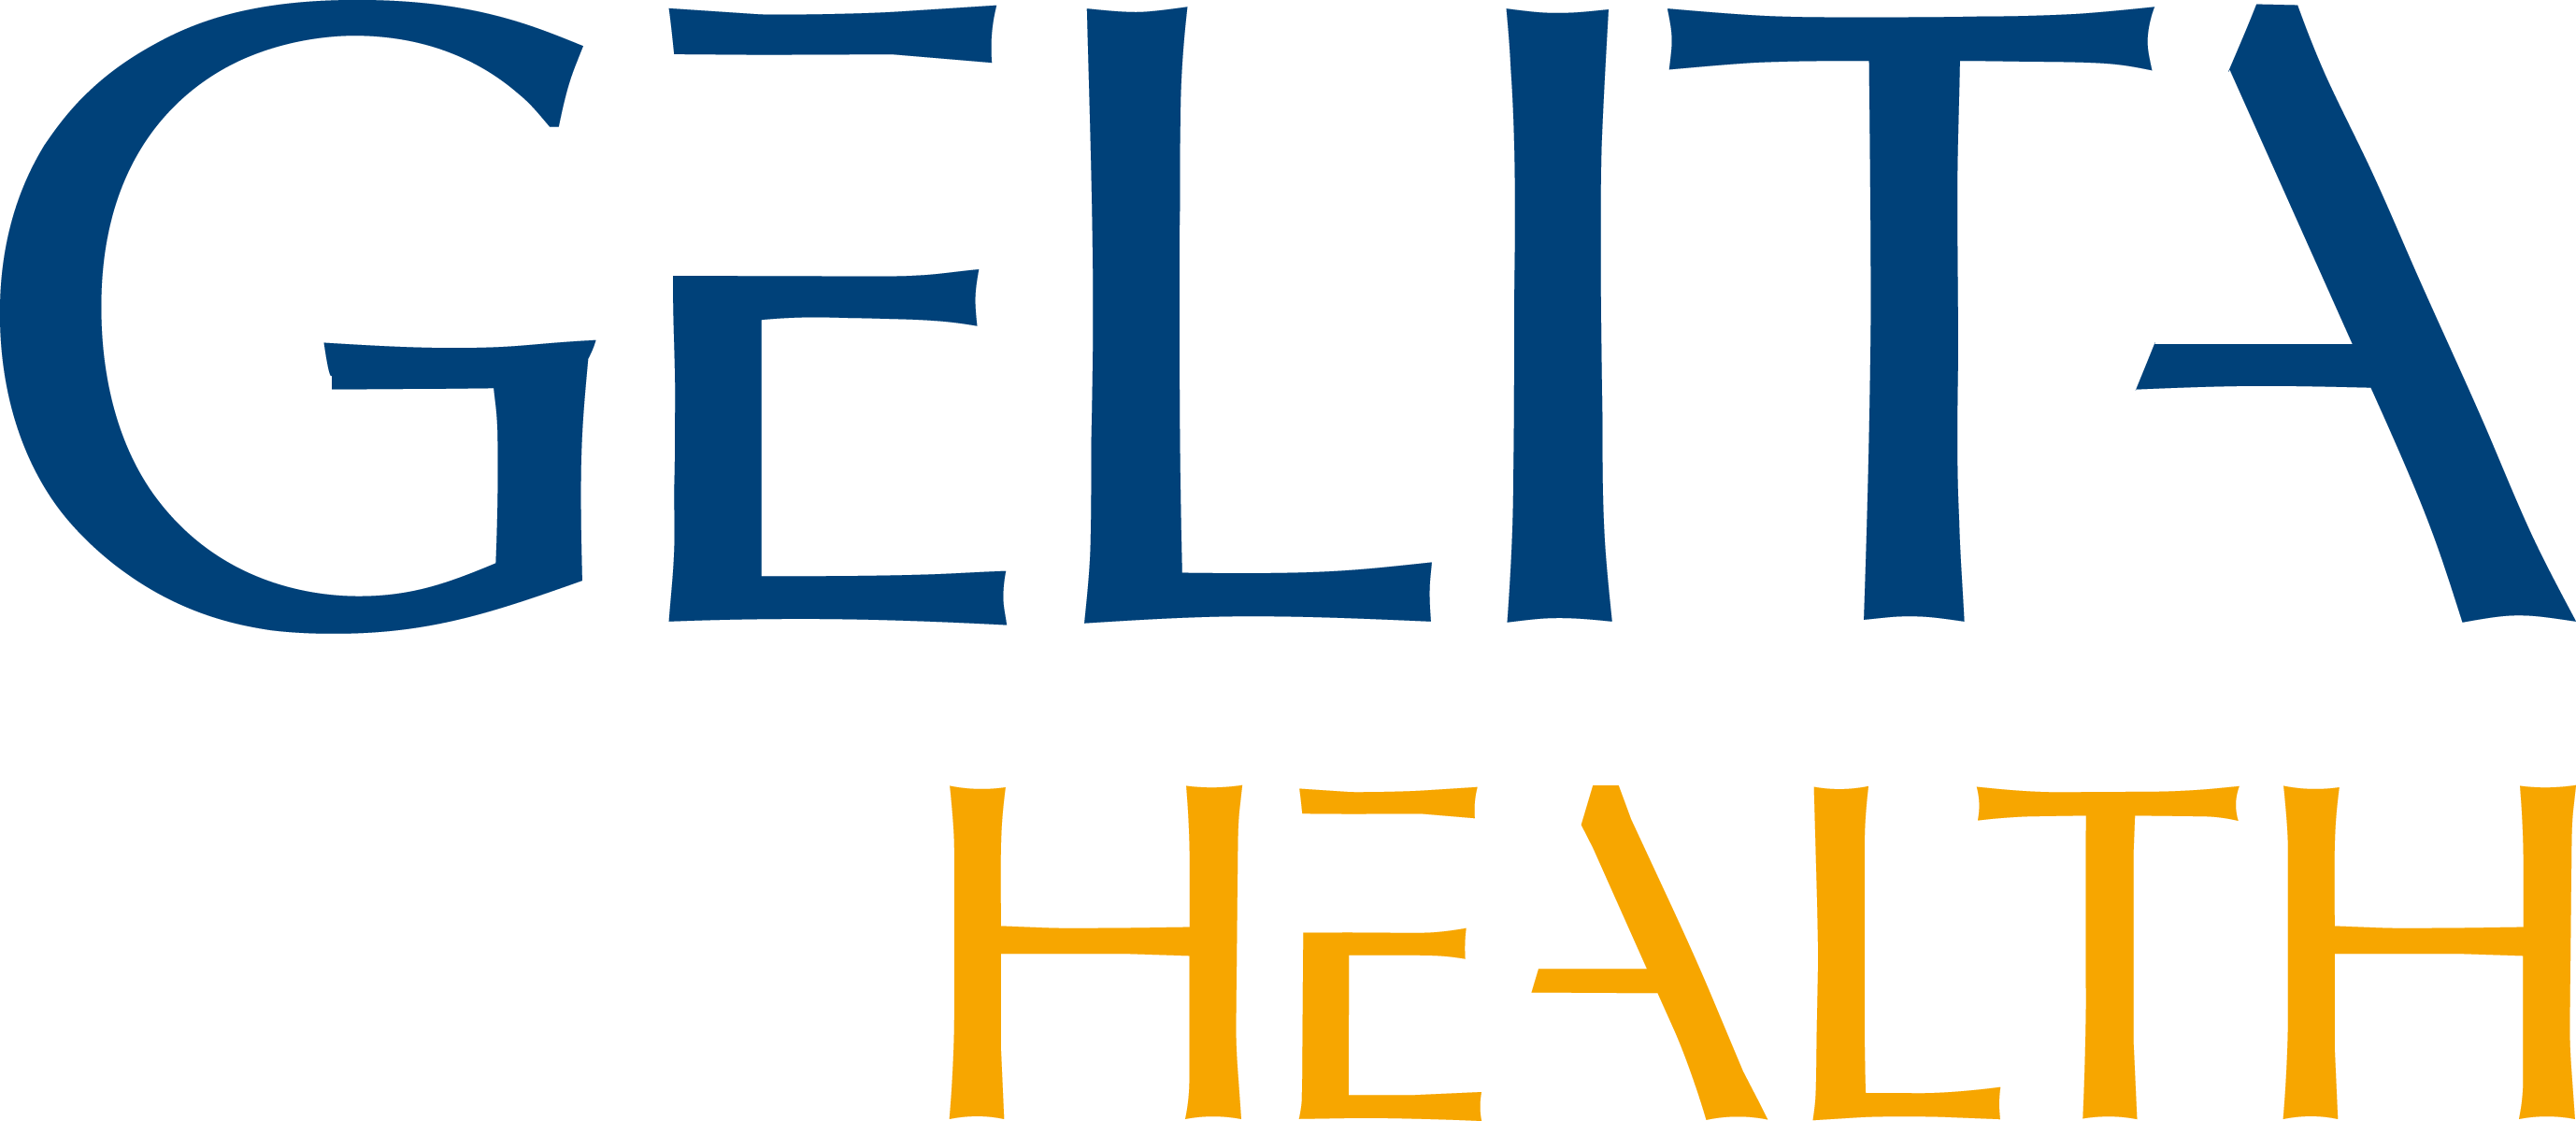 Gelita Health GmbH